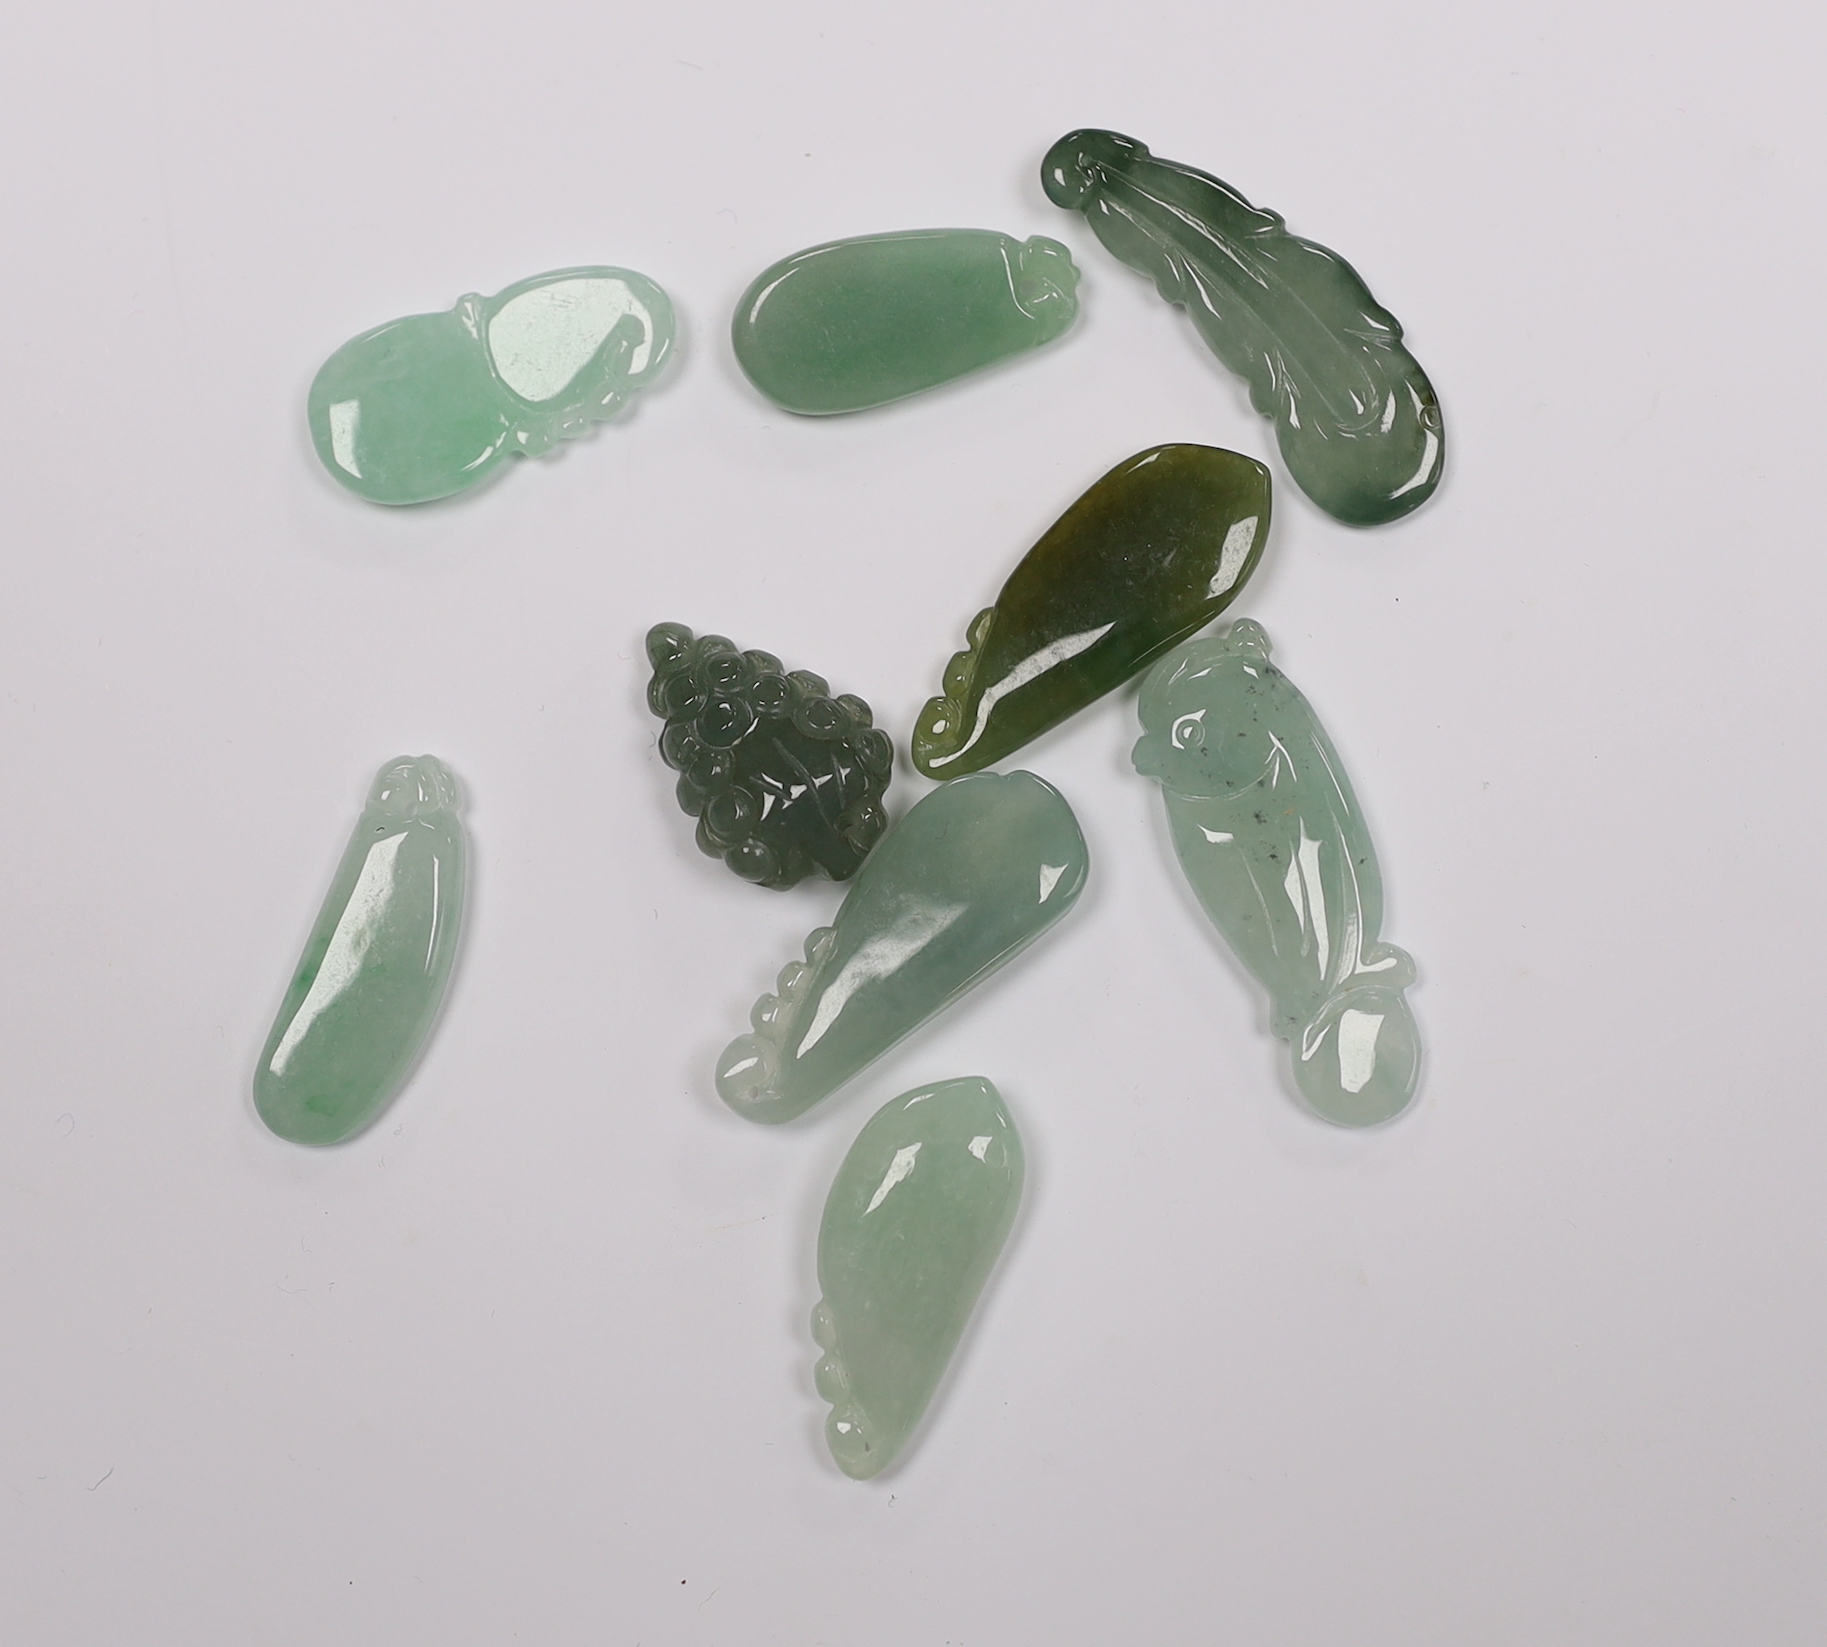 Ten various Chinese carved jadeite pendants